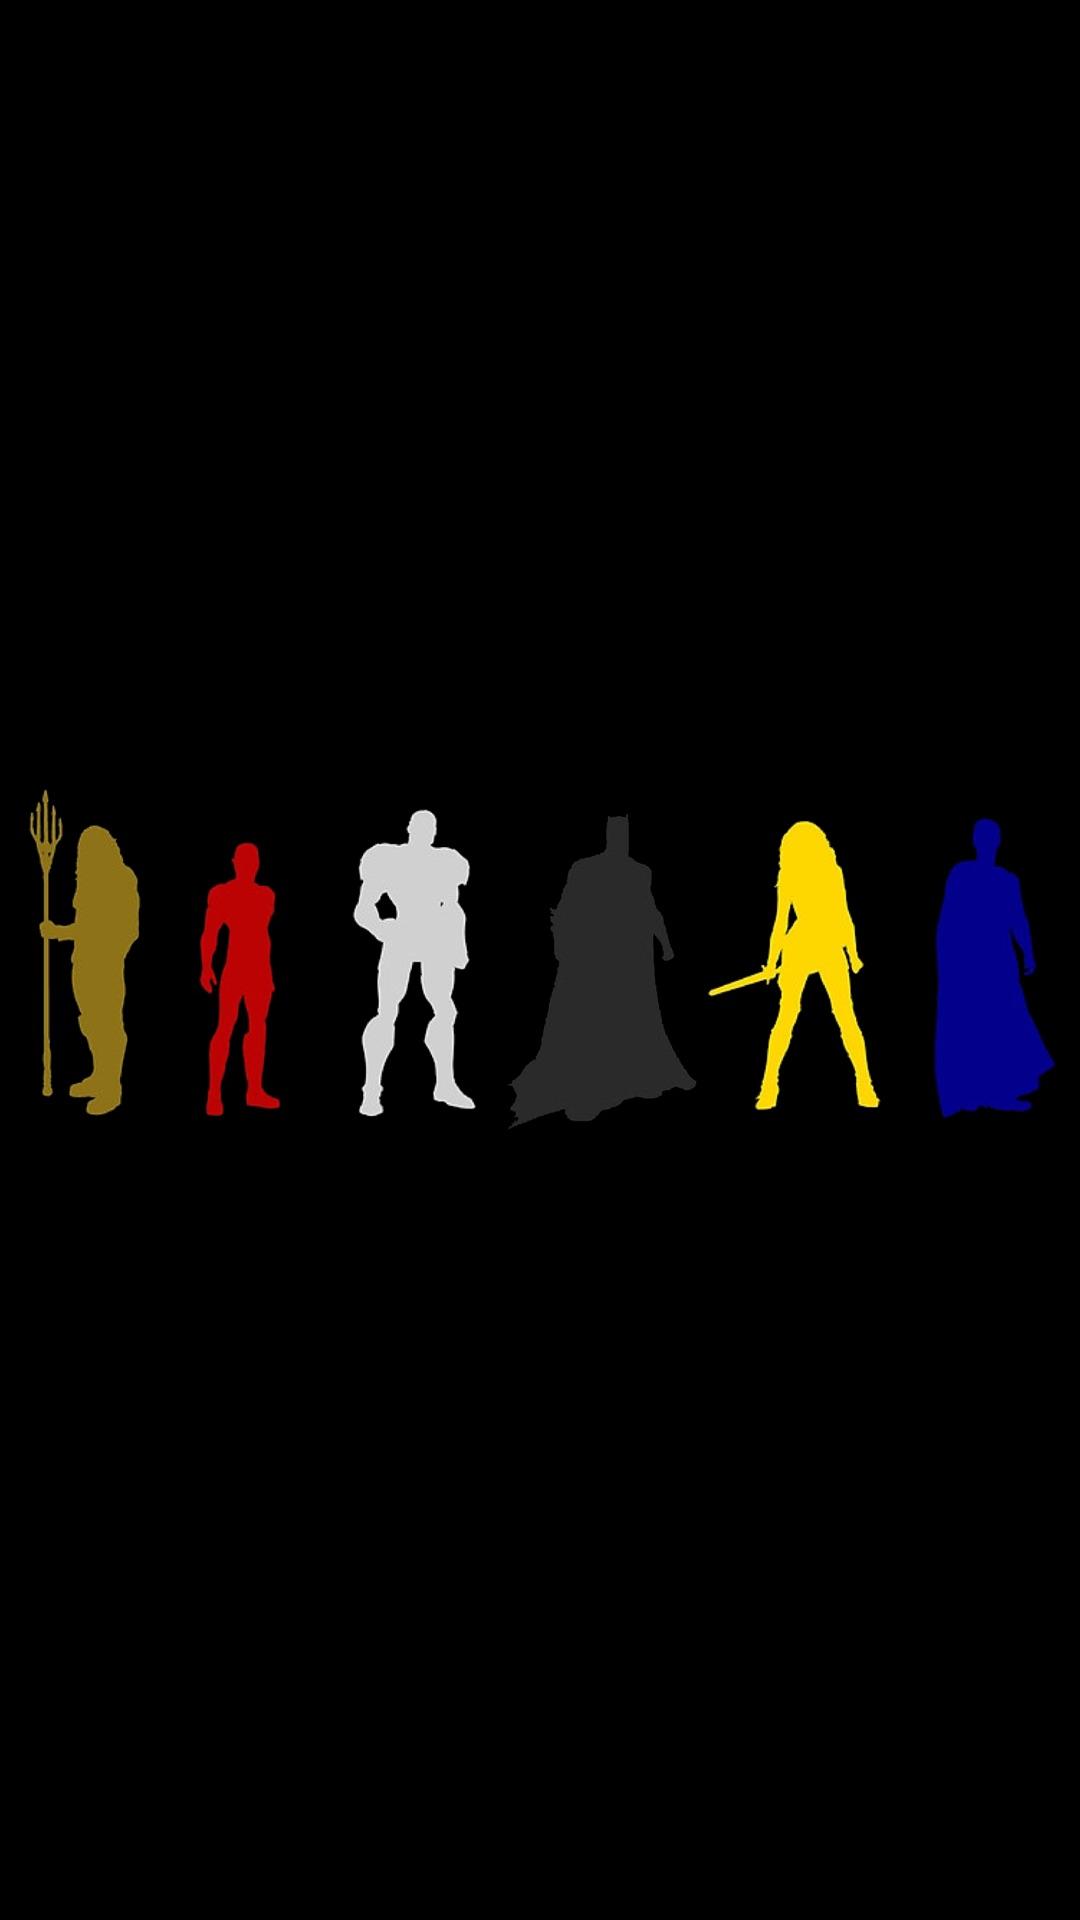 Justice League Silhouette Wallpaper